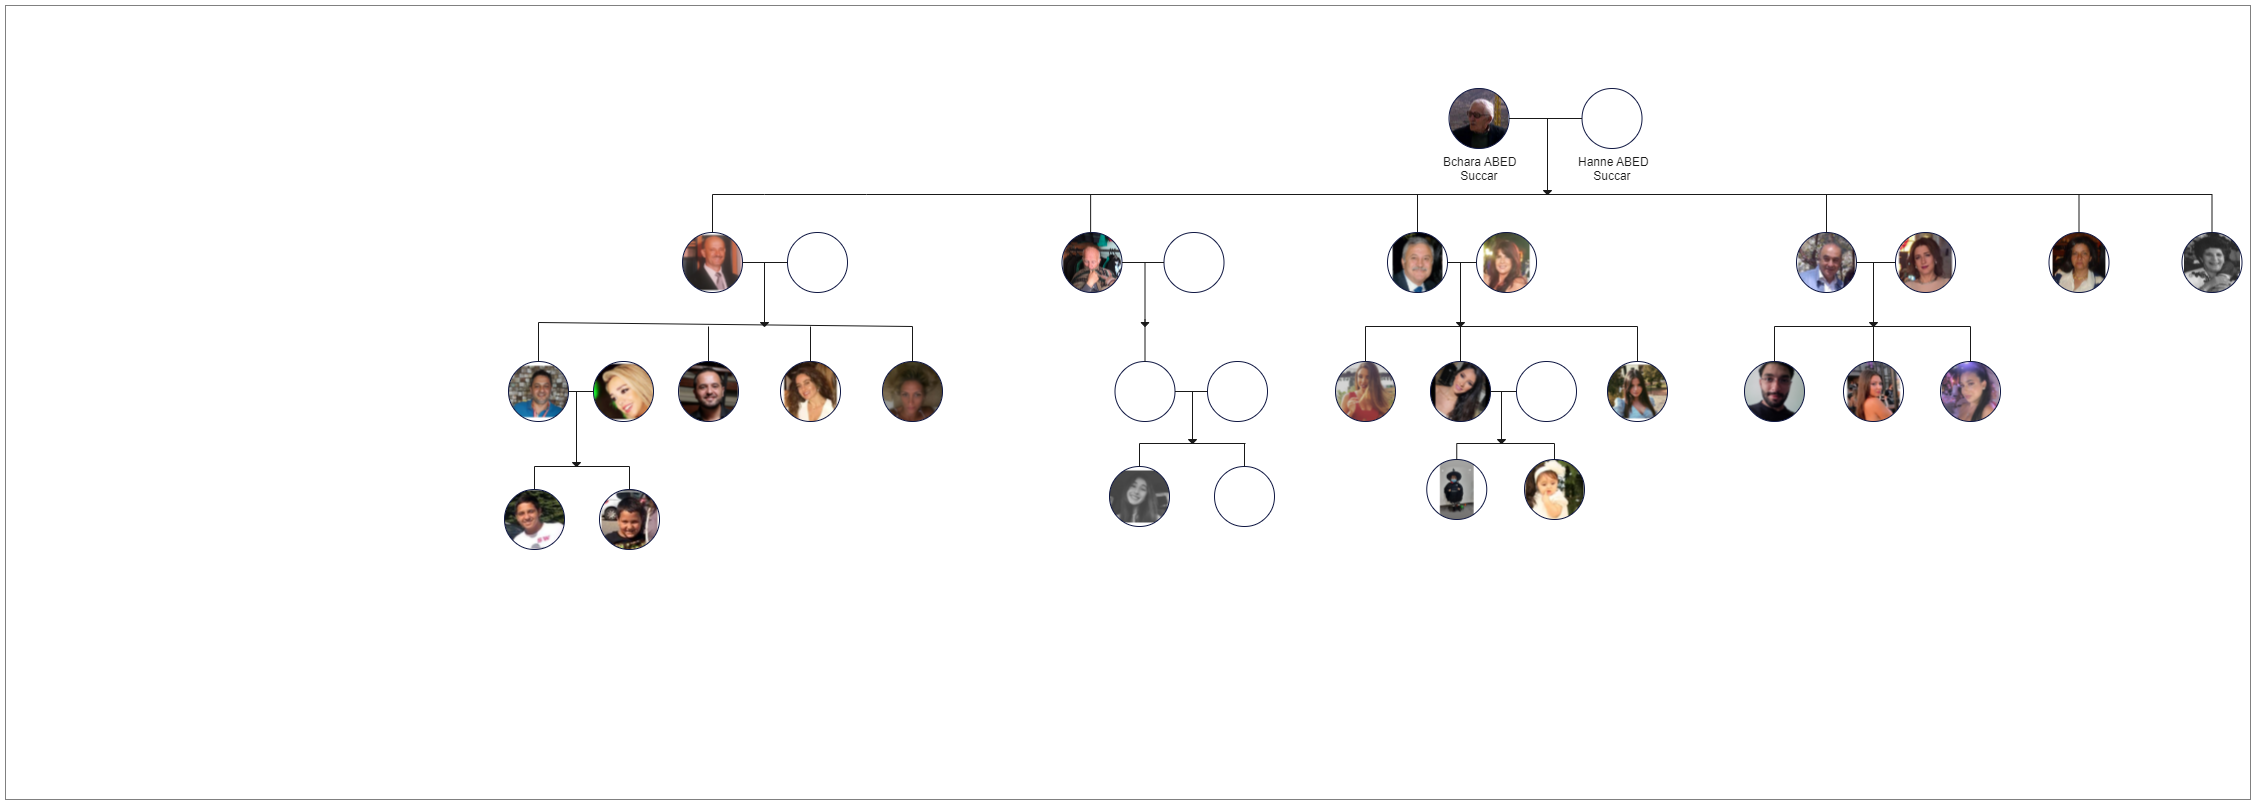 Succar's Family Relationship Diagram